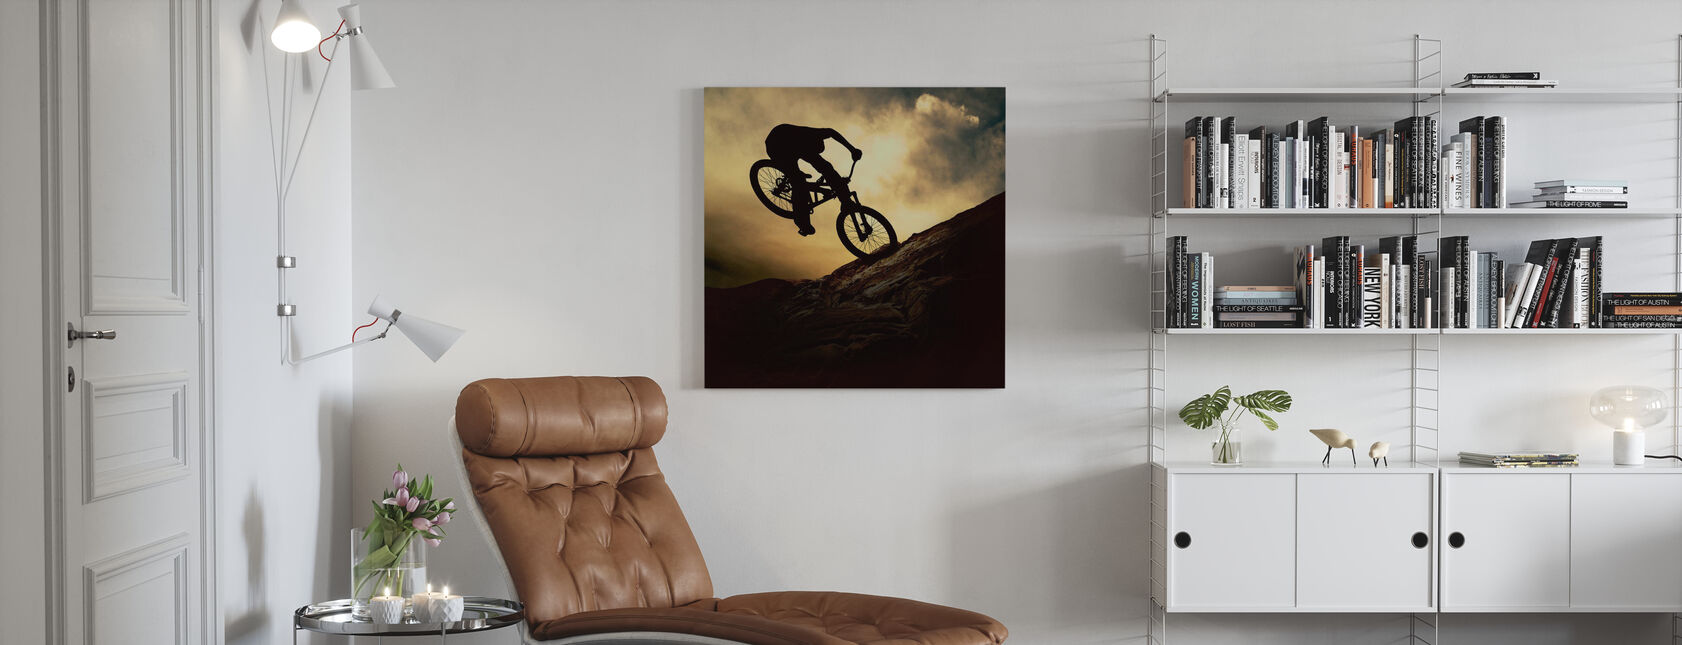 Mountain Bike Rider - Canvas print - Living Room